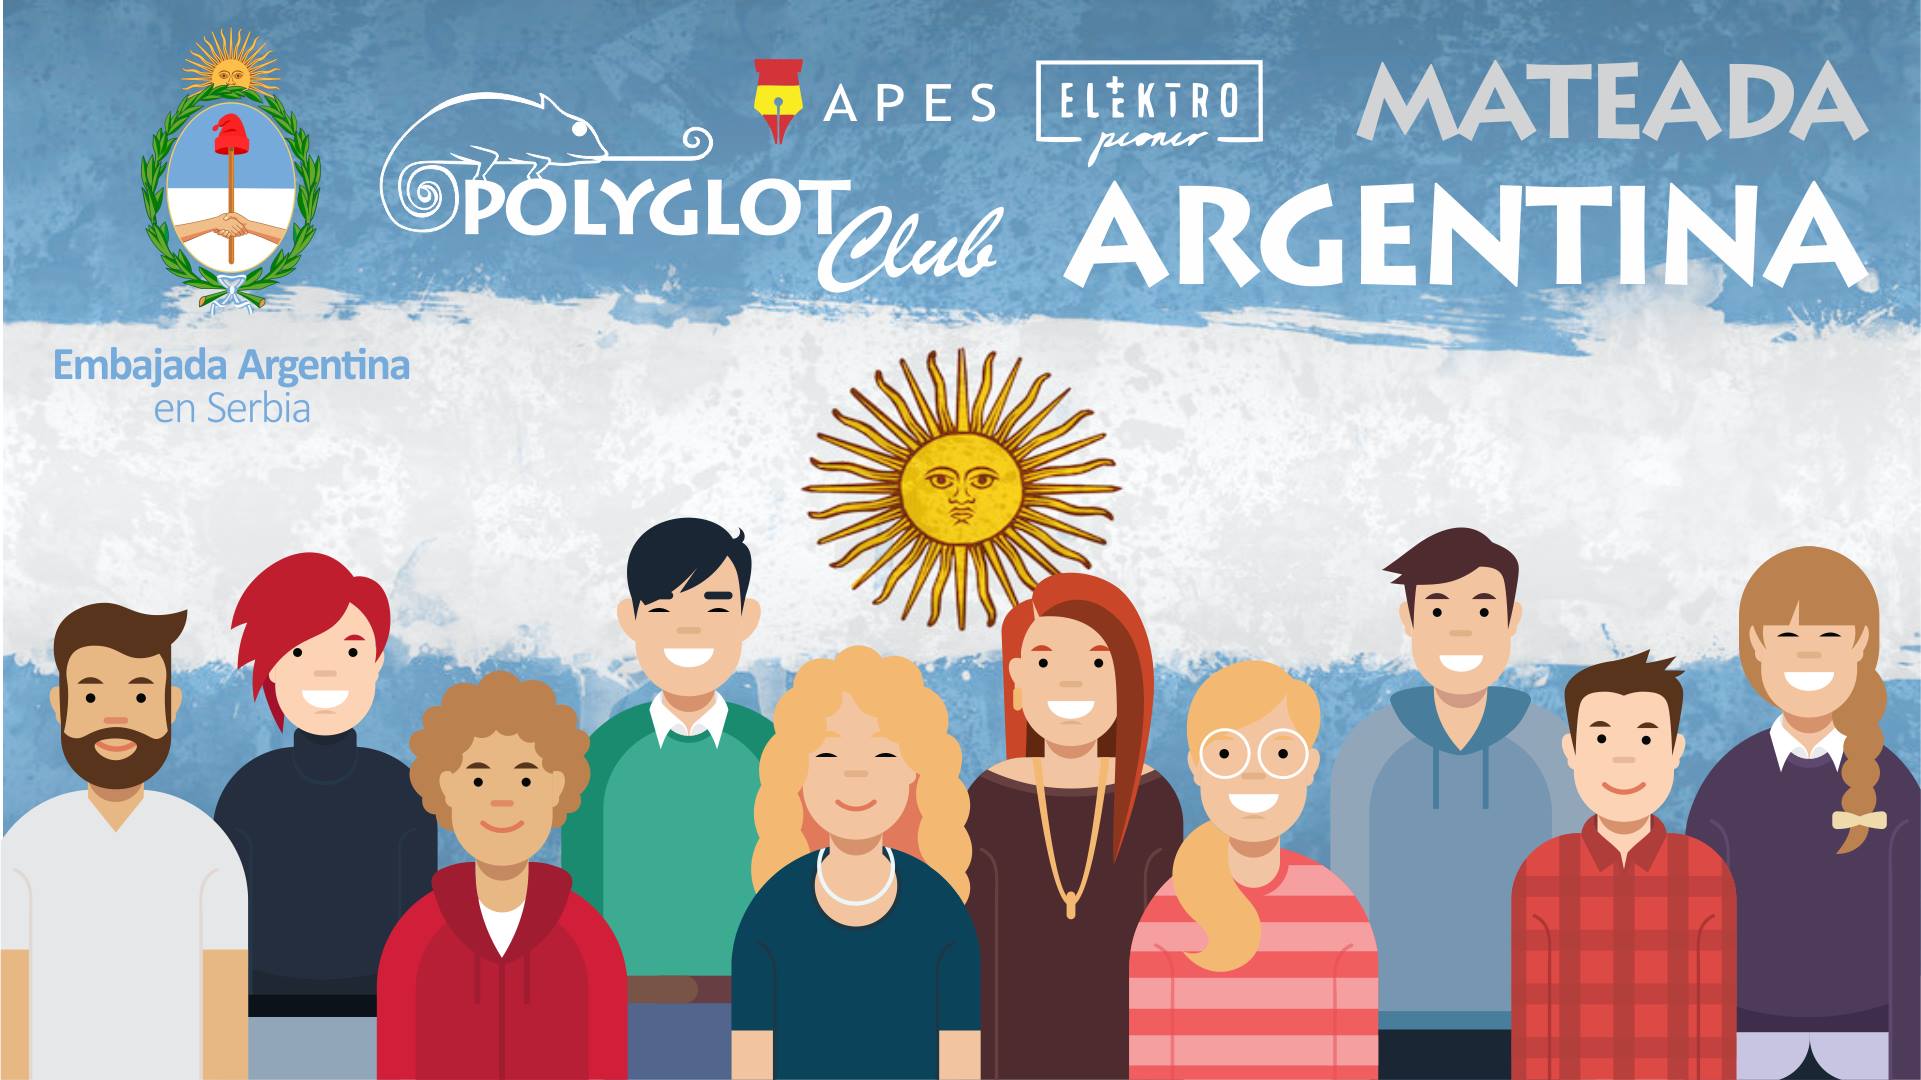 Polyglot Club Mateada Argentina 04.07.2018. Elektropionir